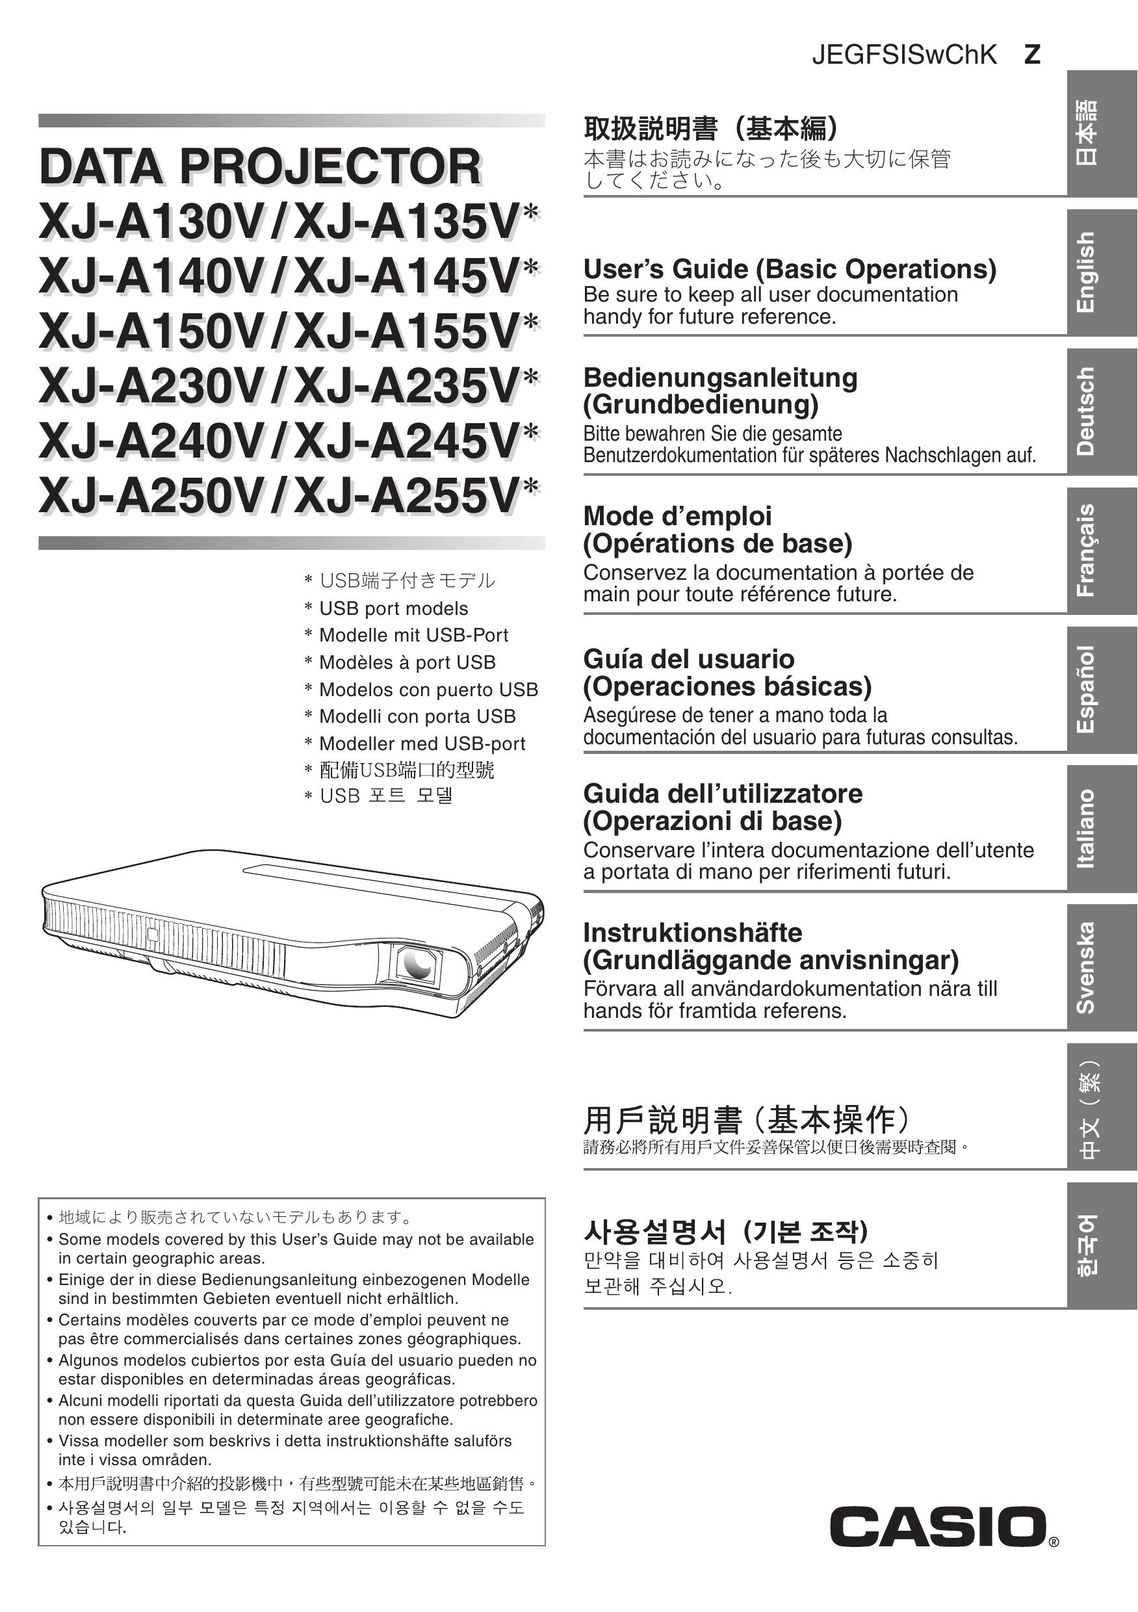 Casio XJ-A240V/XJ-A245V* Projector User Manual